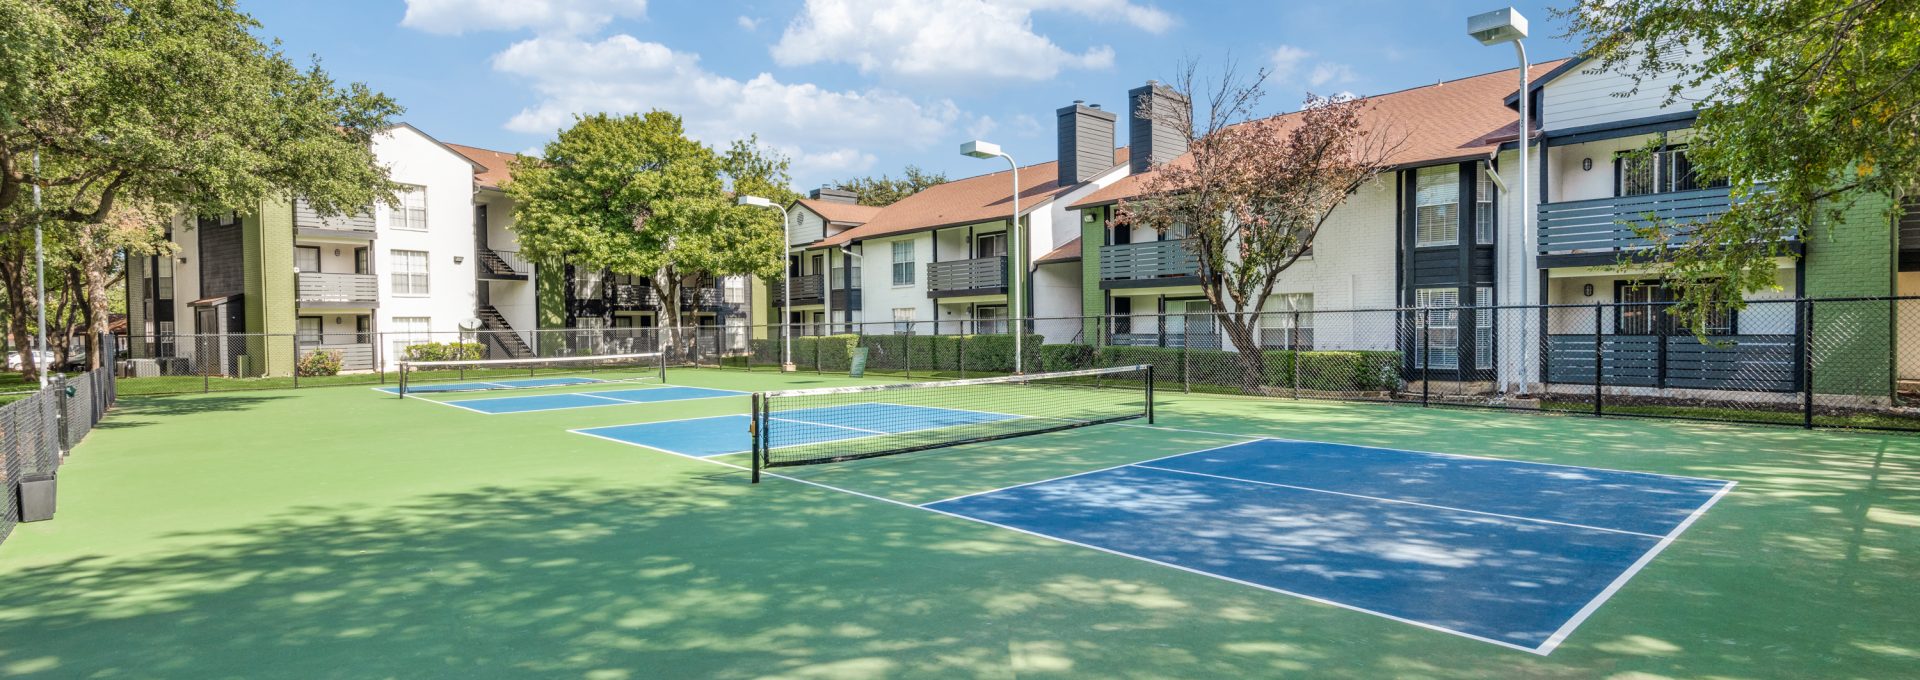 tennis court at The Richmond